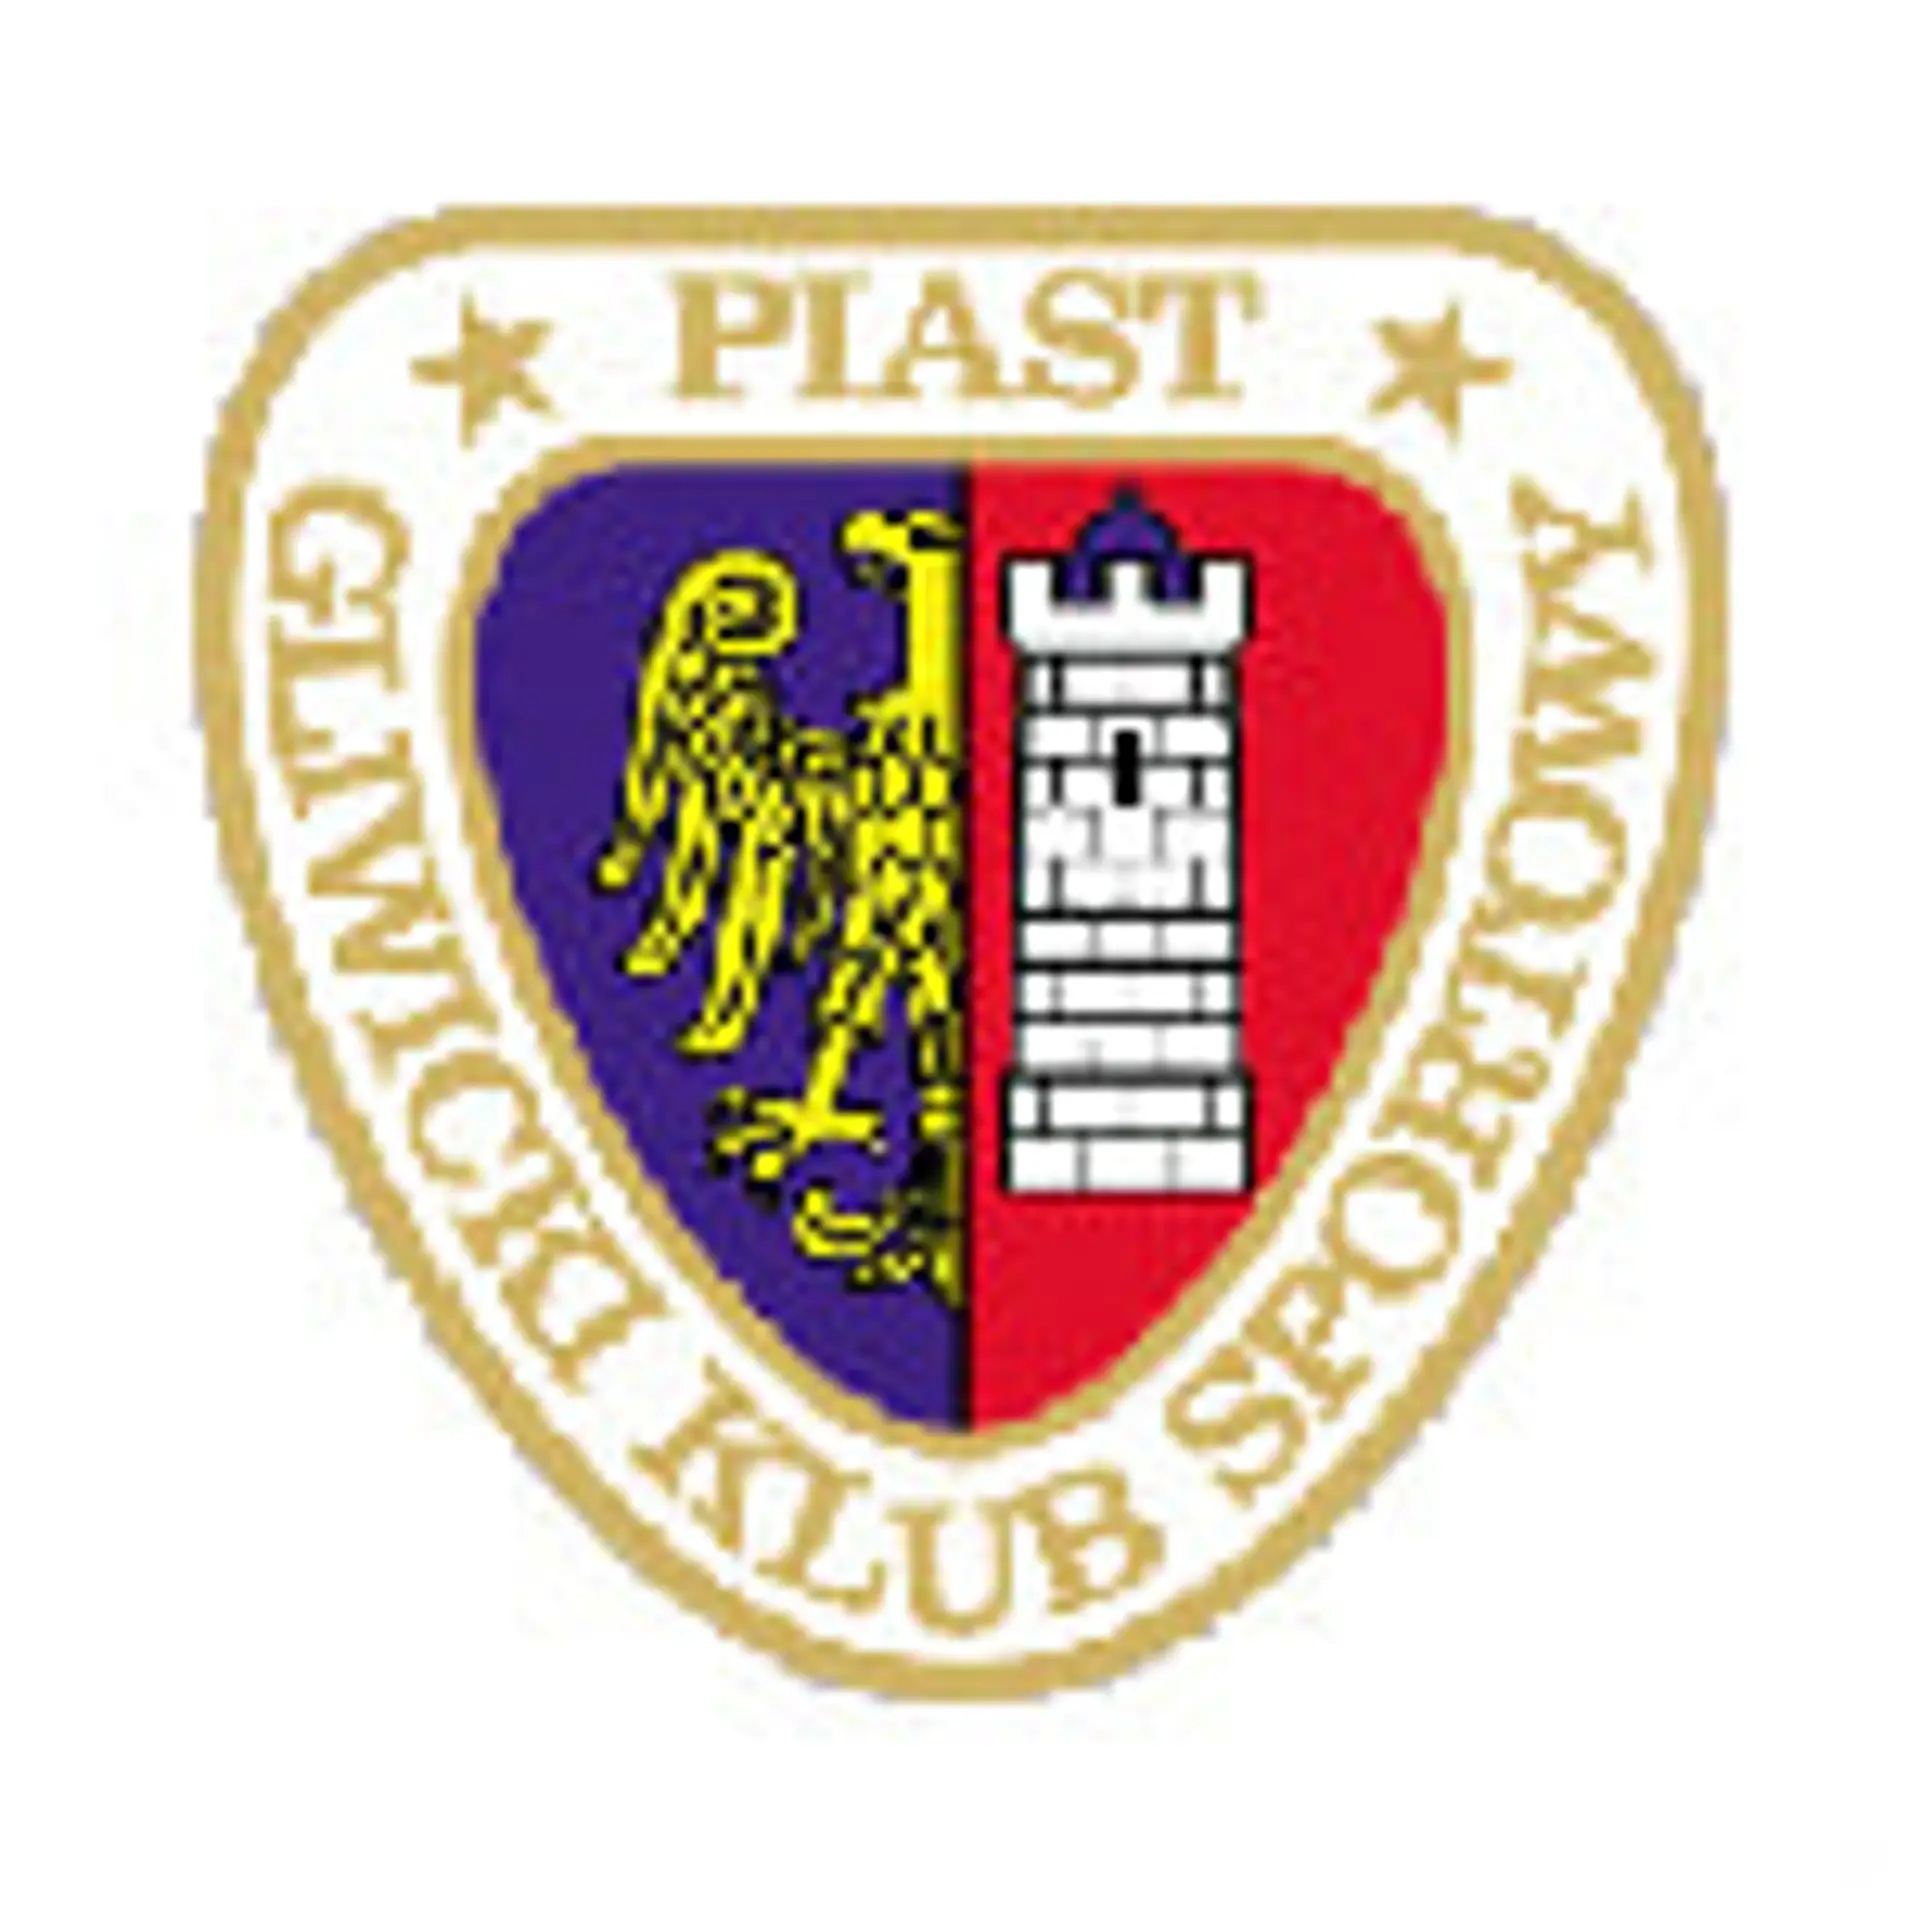 GKS Piast Gliwice Standings 